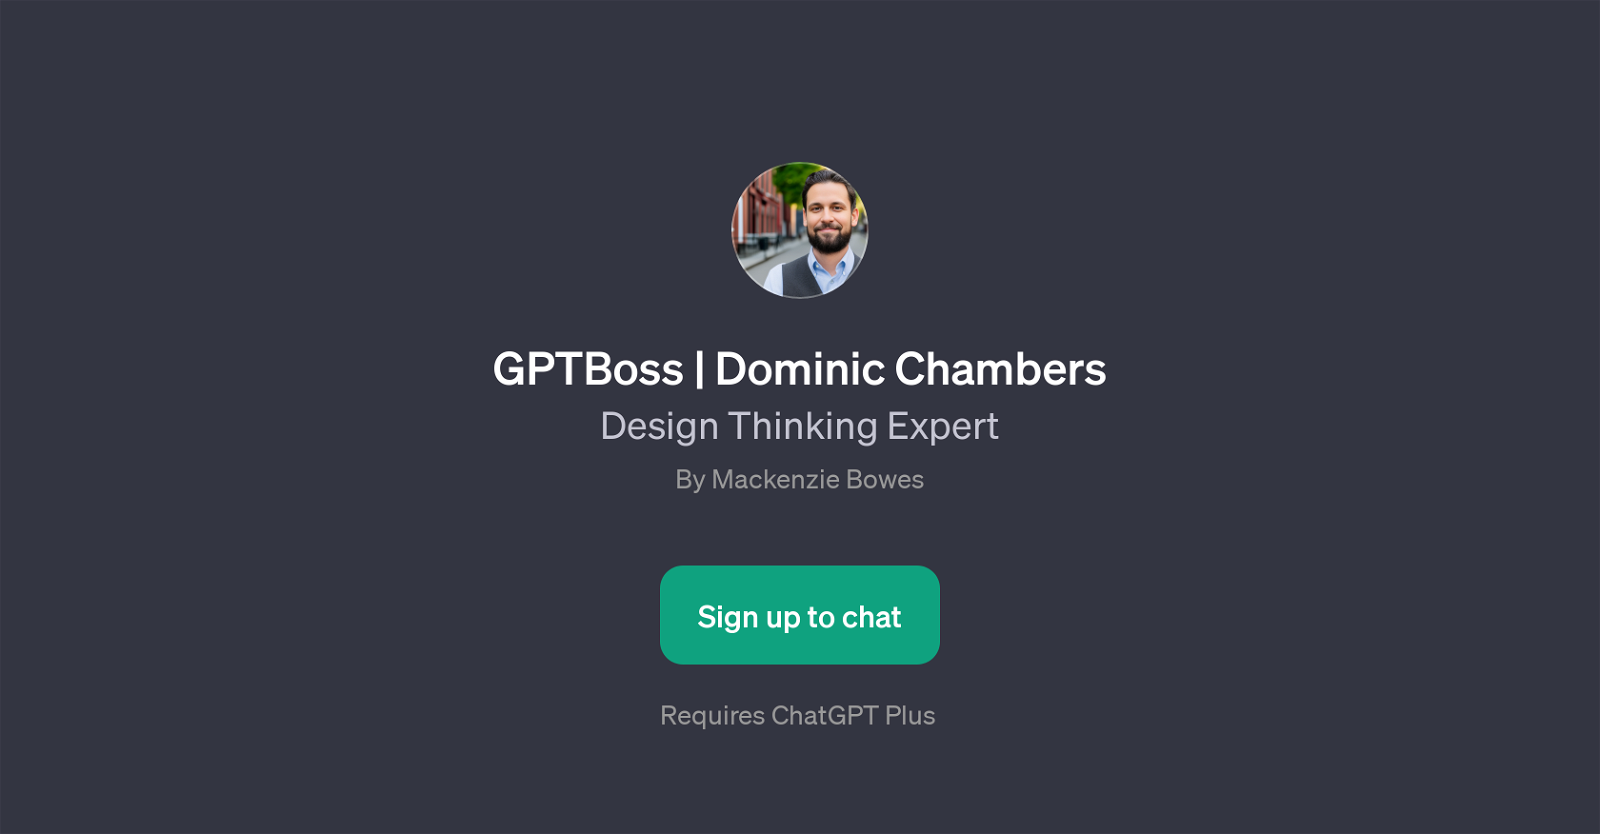 GPTBoss | Dominic Chambers website